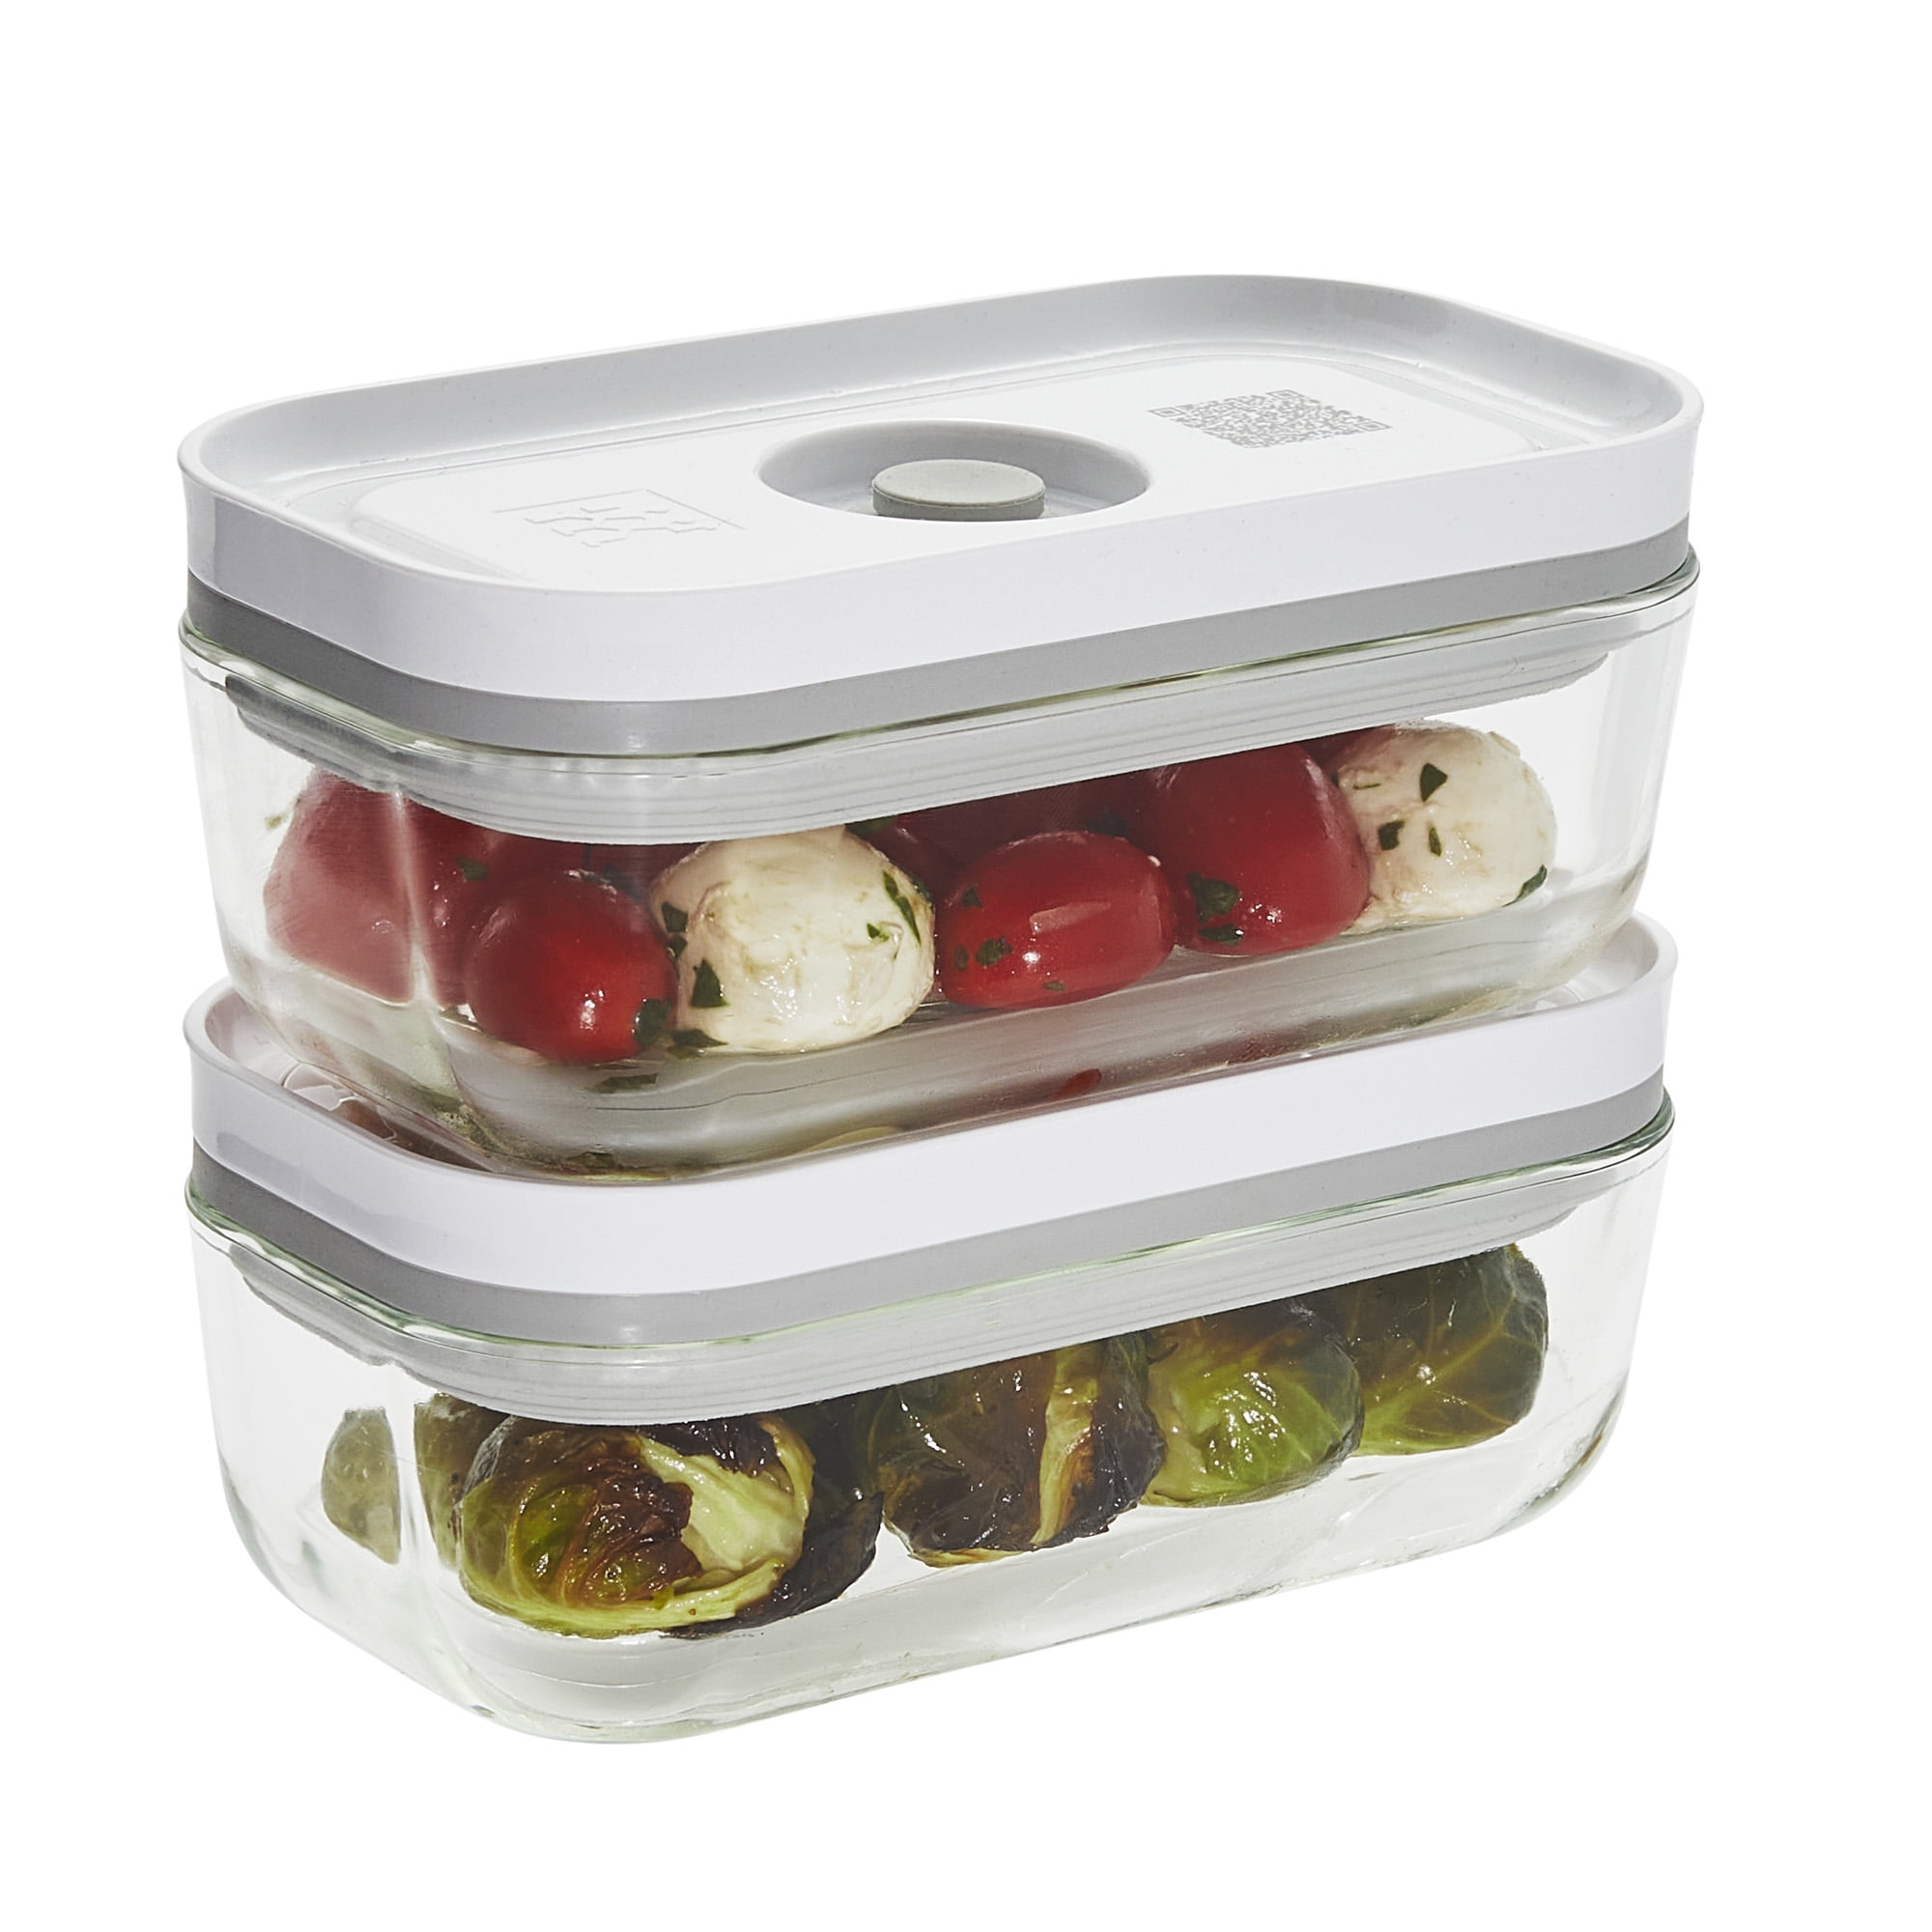 Lasting Freshness 11 Piece Vacuum Seal Food Storage Container Set, Square